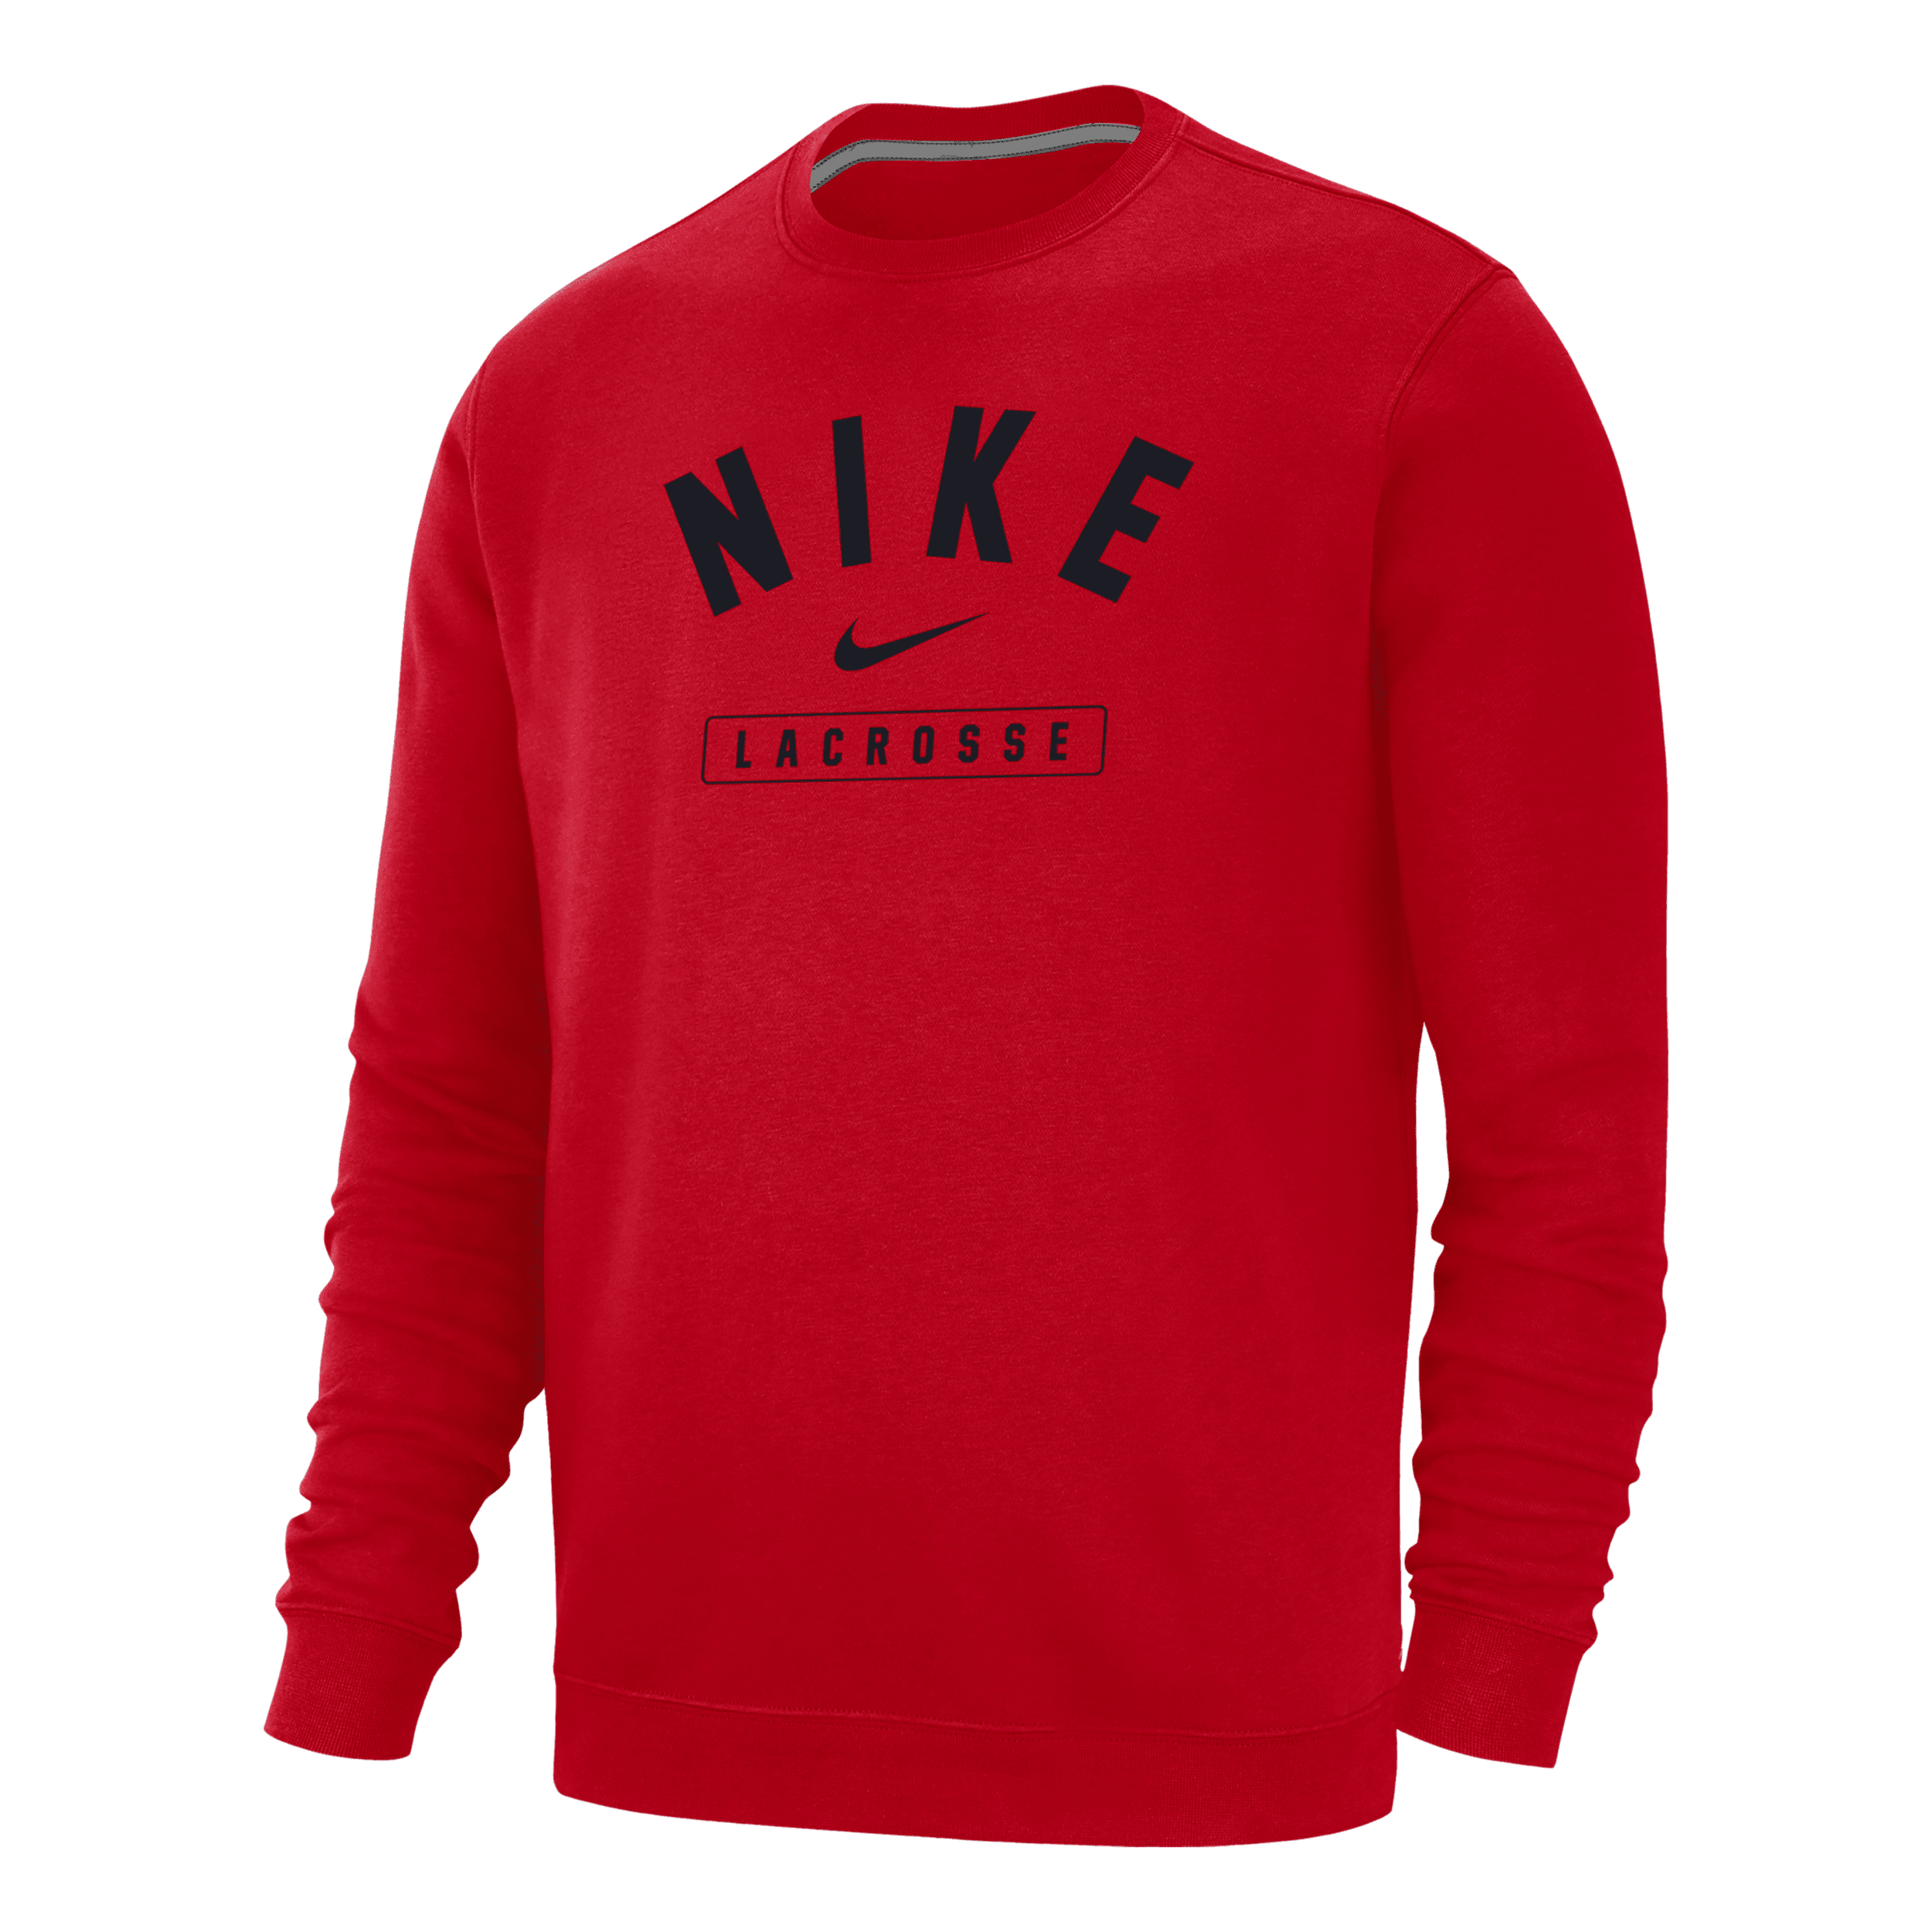 Nike Men's Lacrosse Crew-neck Sweatshirt In Red